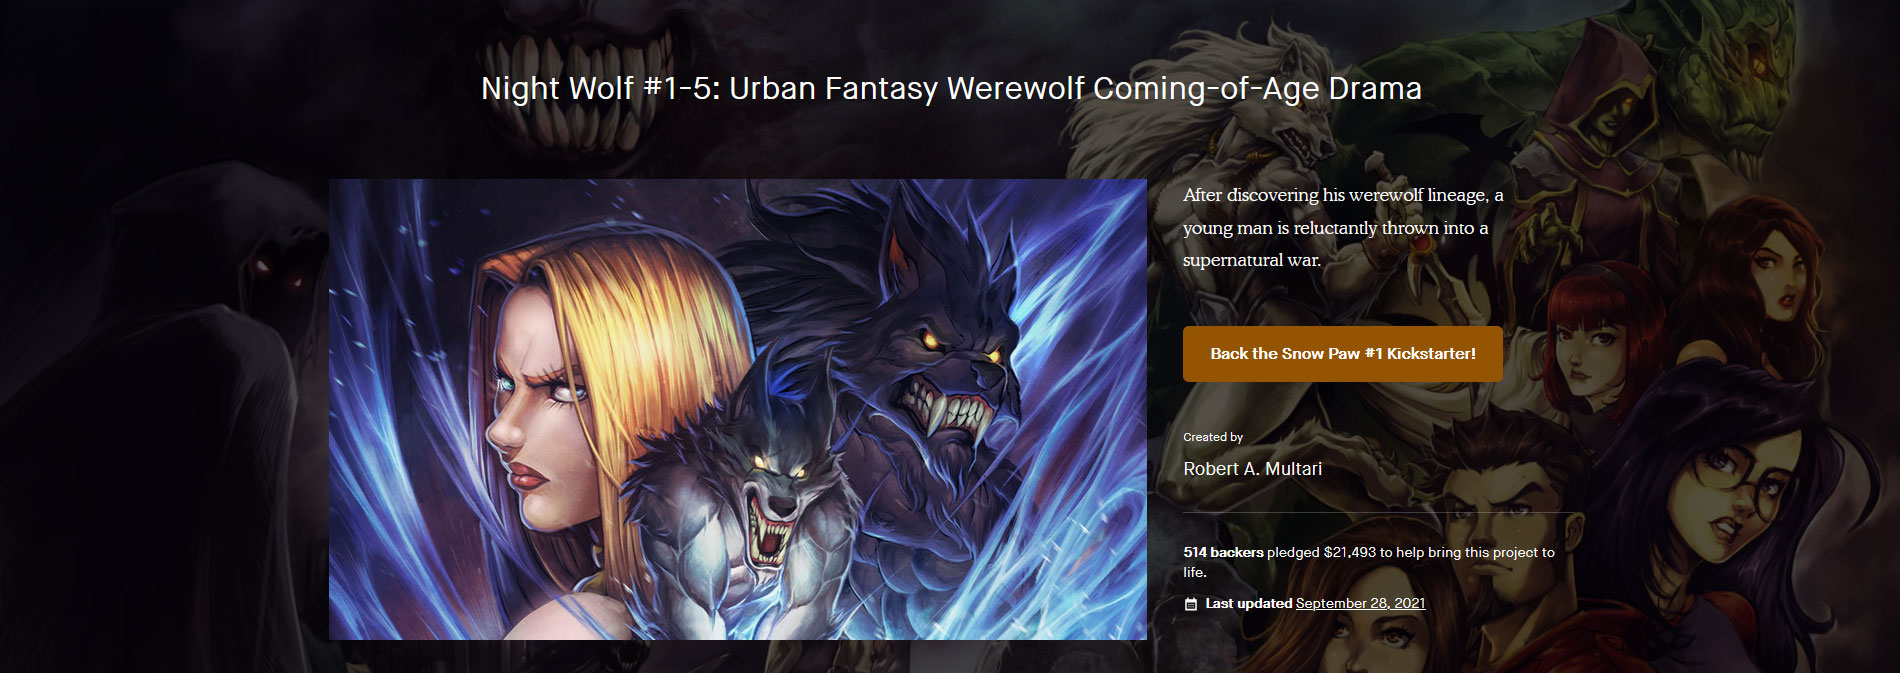 Night Wolf #1-4: Urban Fantasy Werewolf Coming of Age Drama Kickstarter